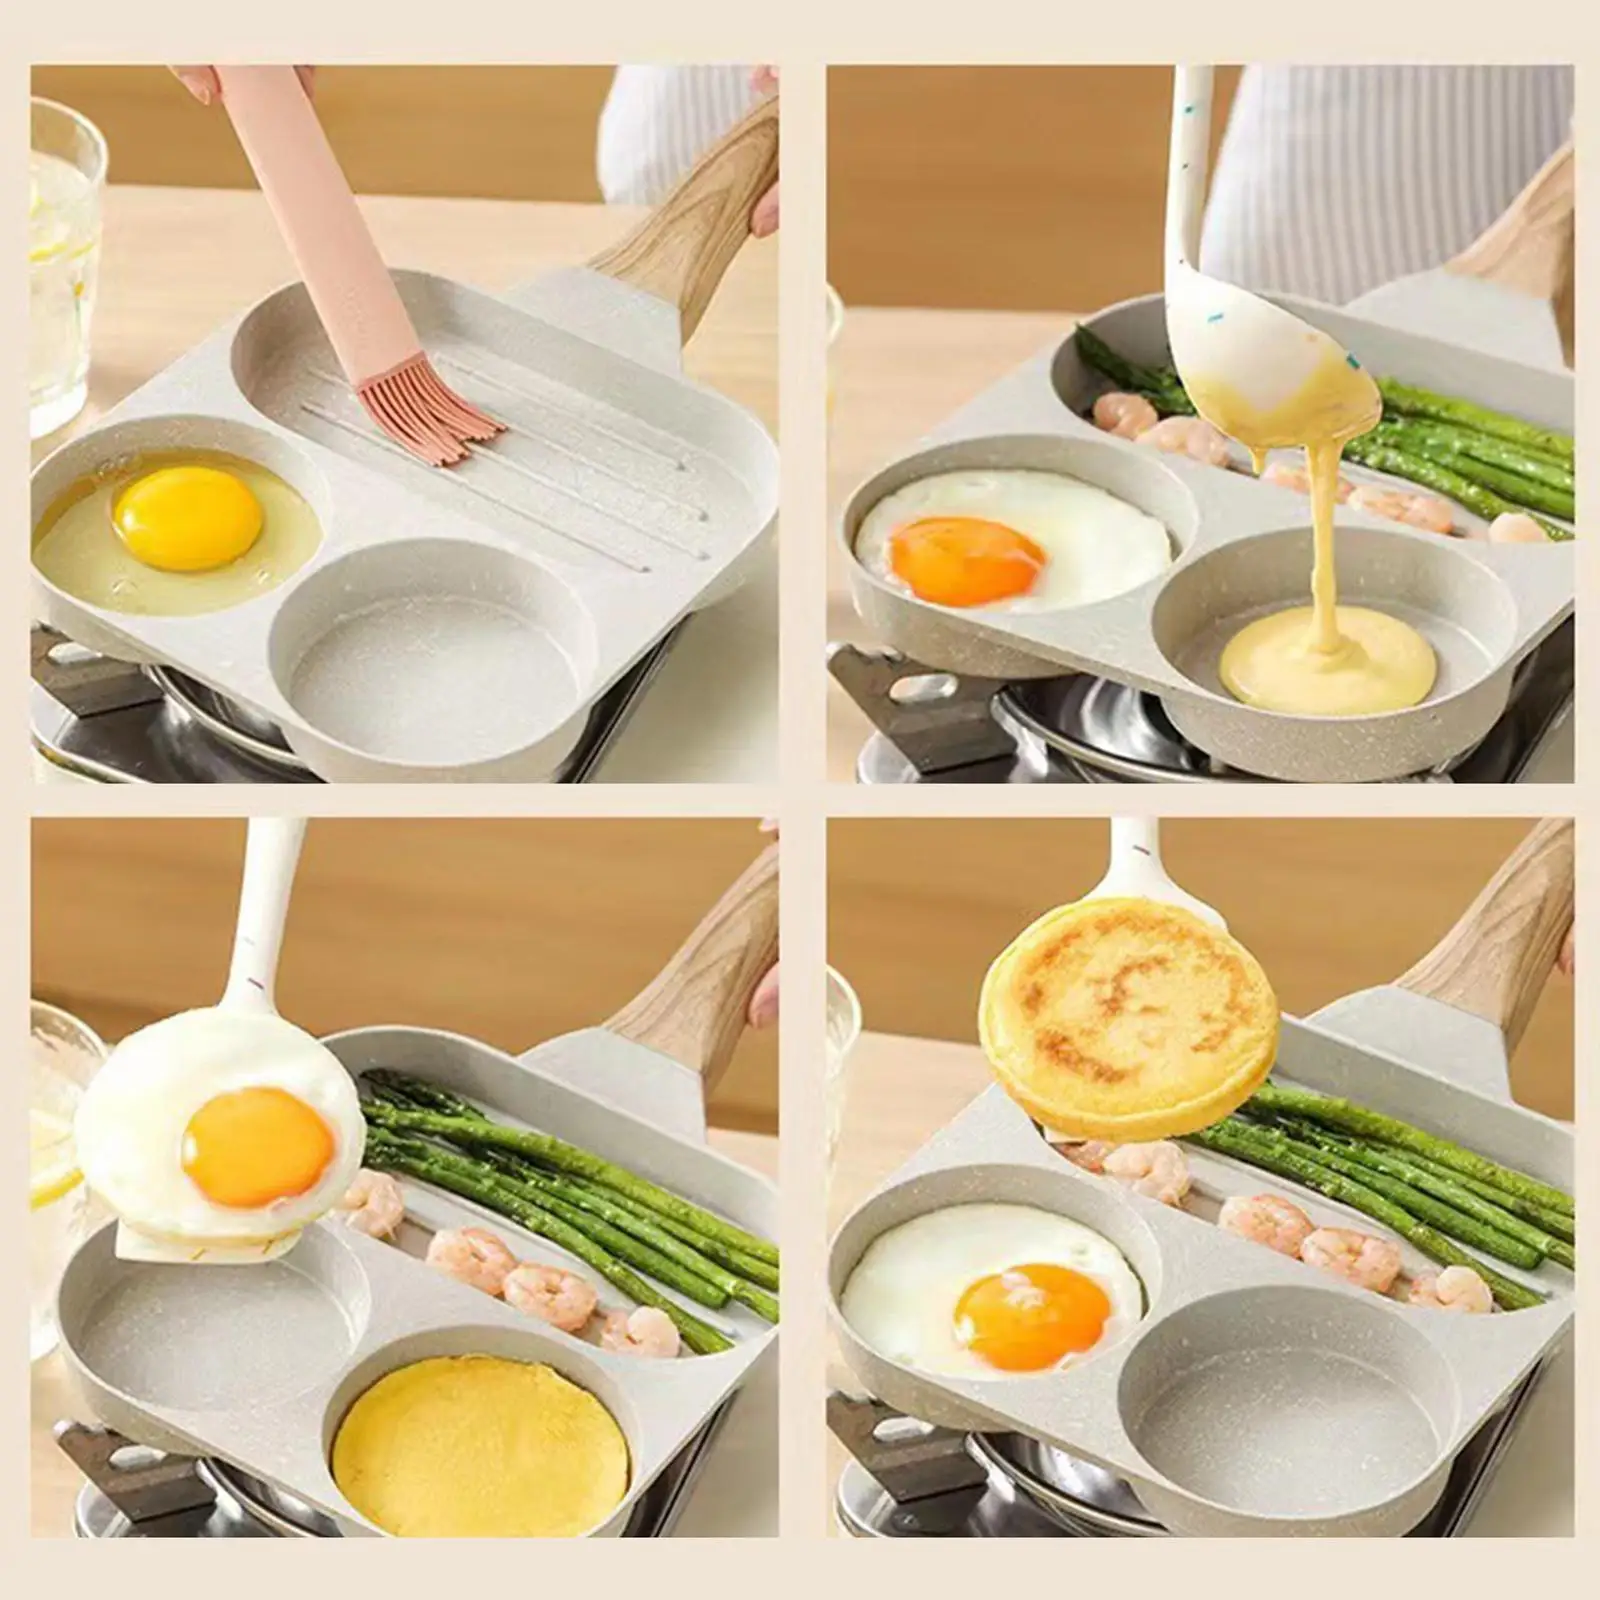 https://ae01.alicdn.com/kf/Sb30386847812402dbdb362d093c8f370g/Divided-Frying-Grill-Pan-Multi-Sectional-for-Breakfast-Cookware-Kitchen.jpg